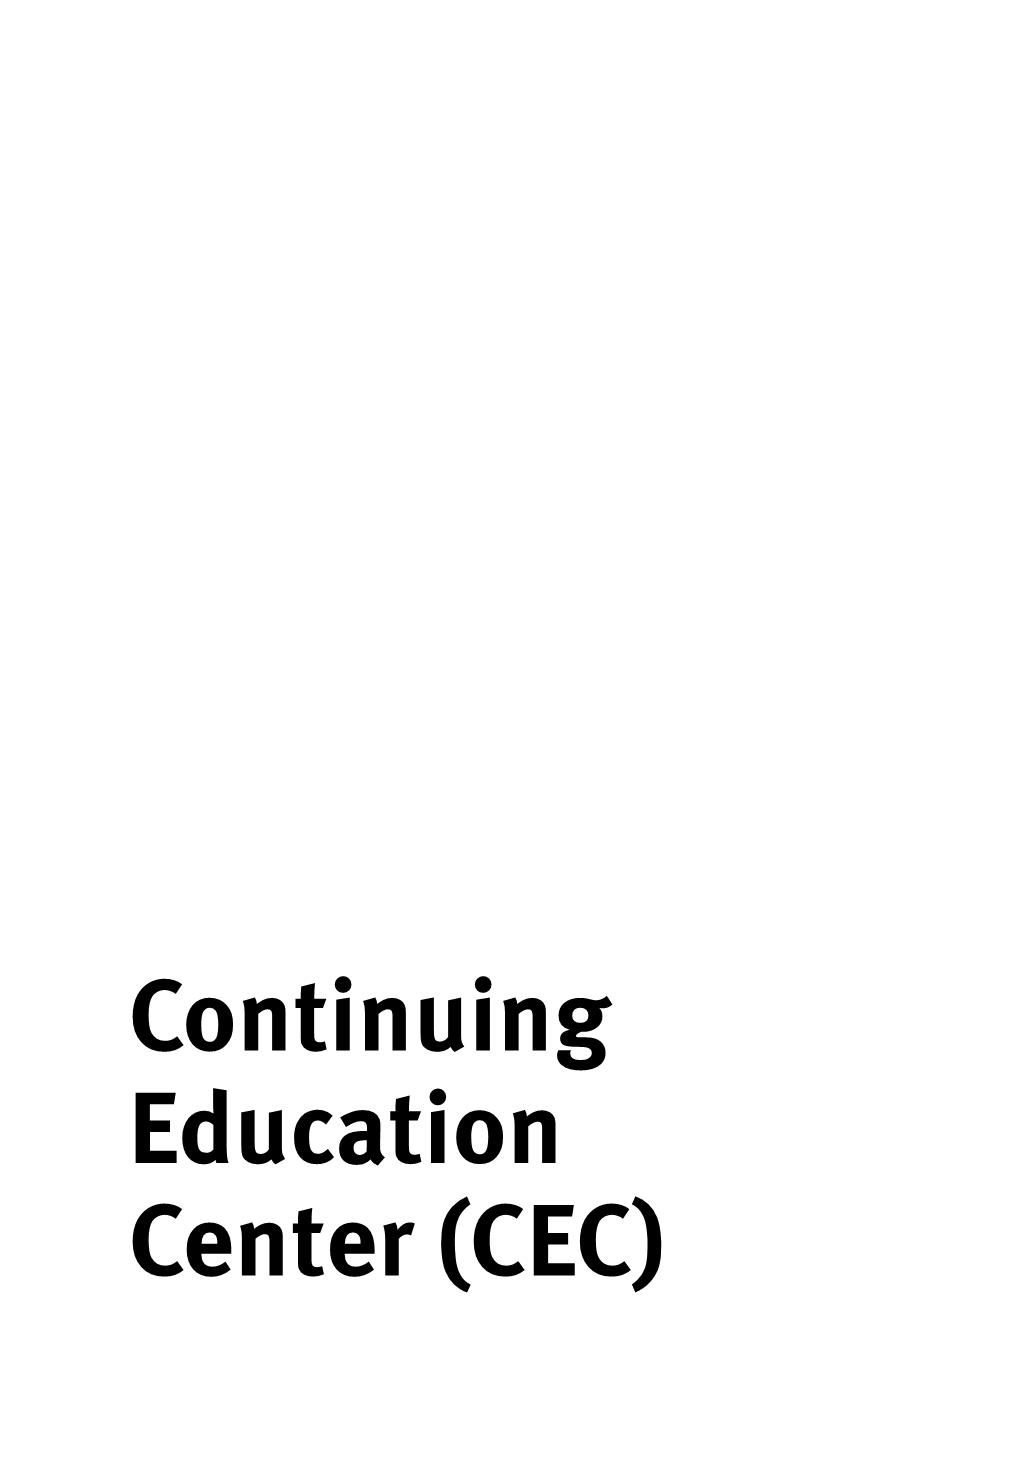 Continuing Education Center (CEC) 510 Continuing Education Center (CEC)